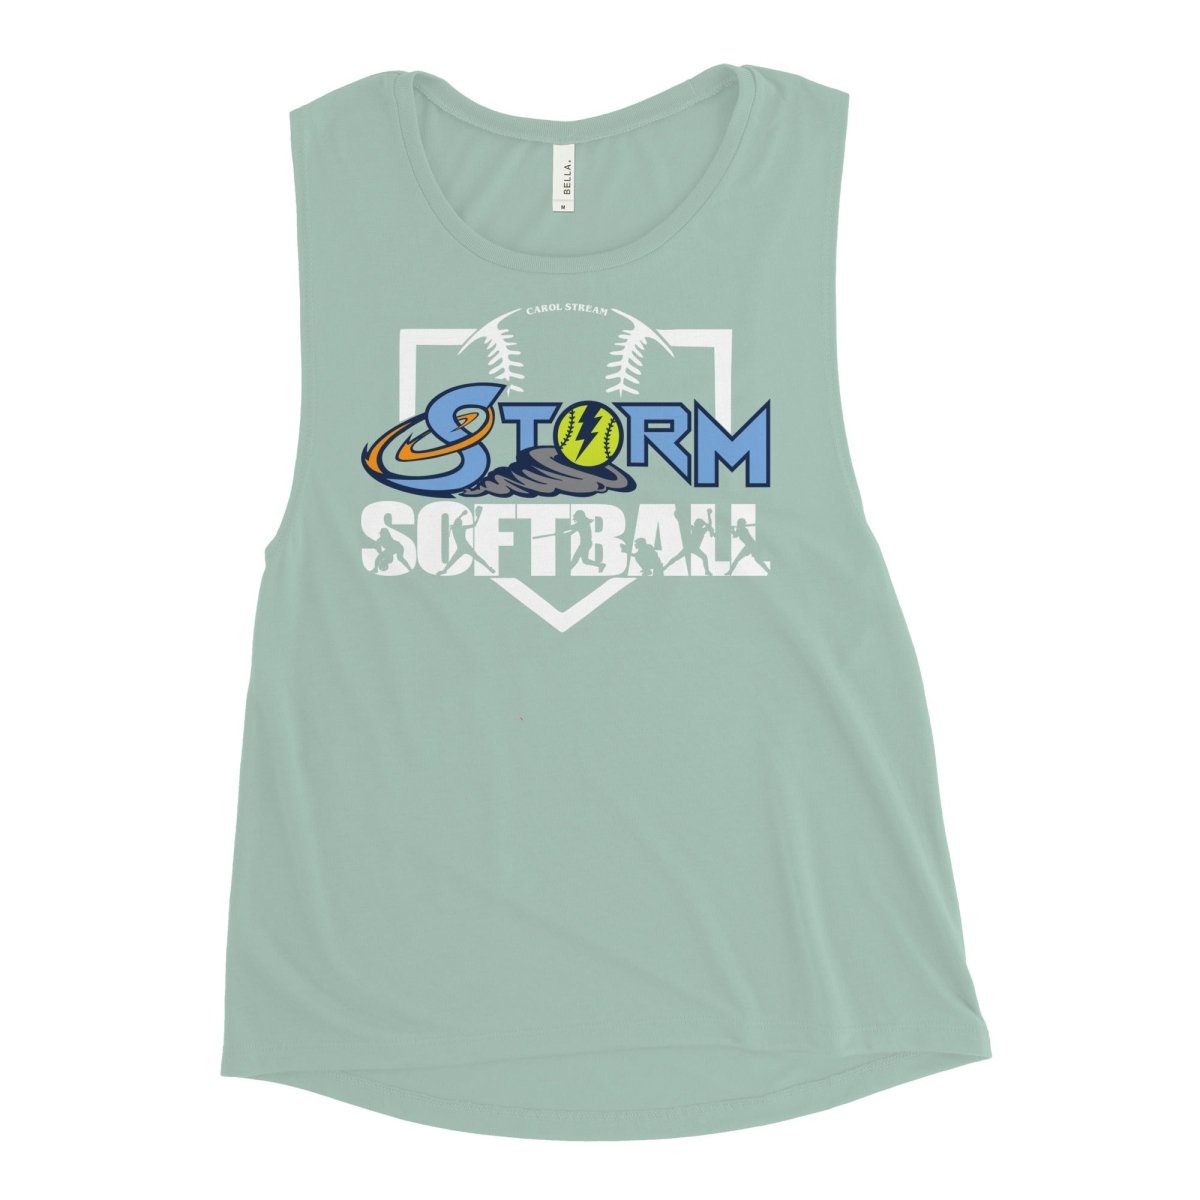 Storm Softball Women's Muscle Tank